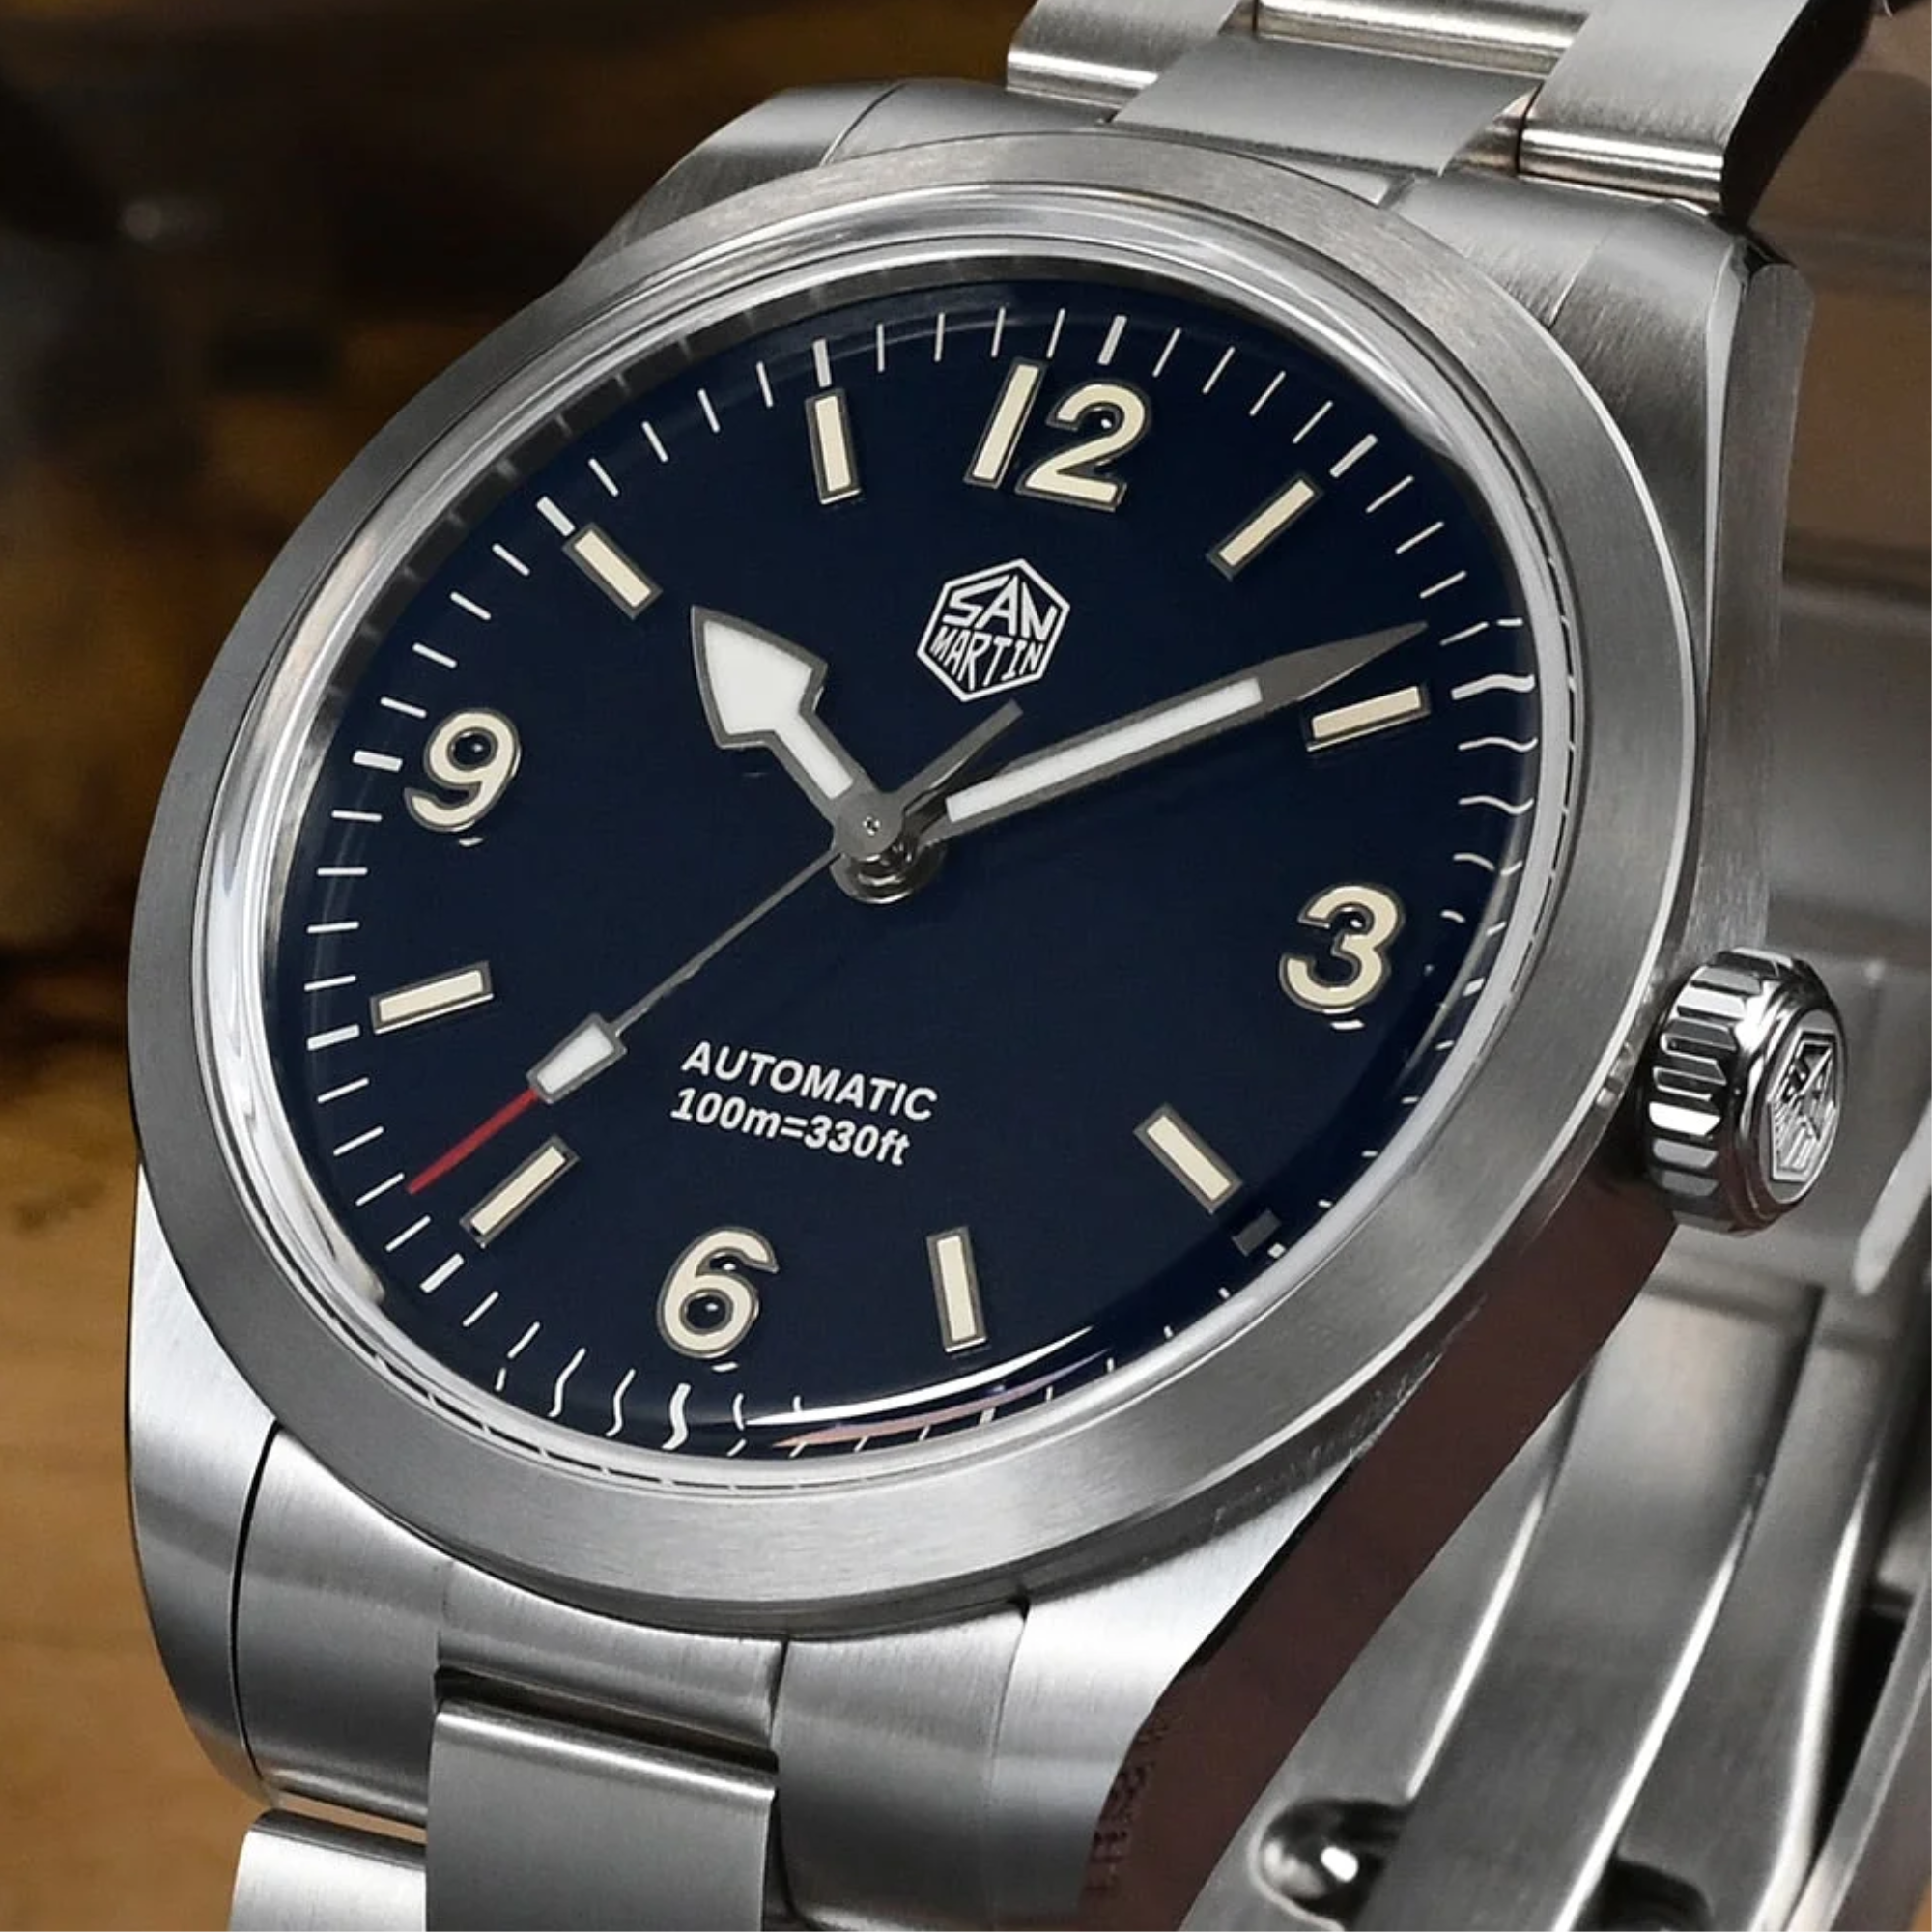 San Martin 38mm Enamel Dial Explore Watch SN0107-G4 - Blue san martin watches india online